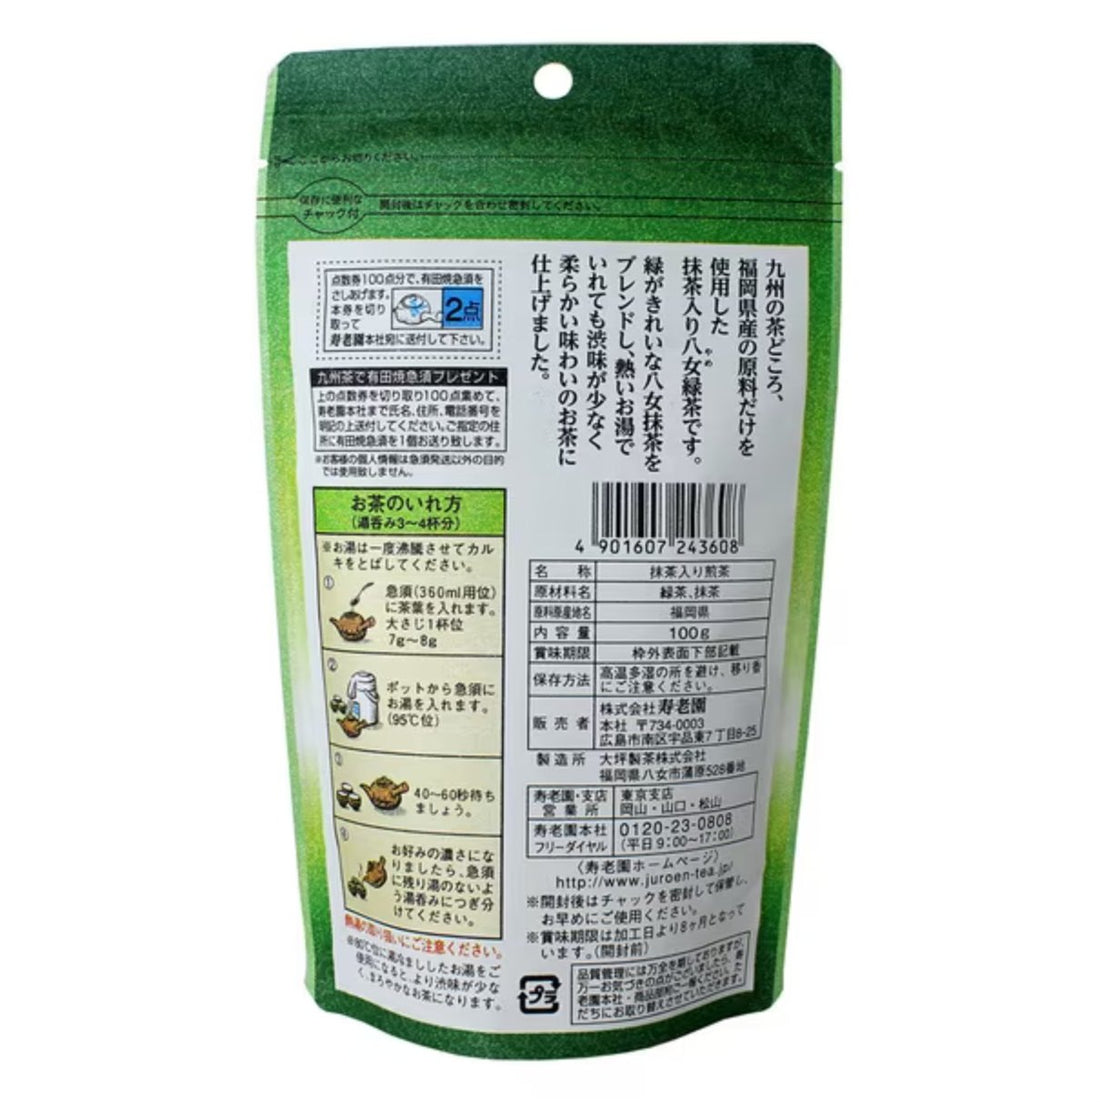 Juroen Yame green tea with matcha using Juroen Yame matcha 100g - NihonMura